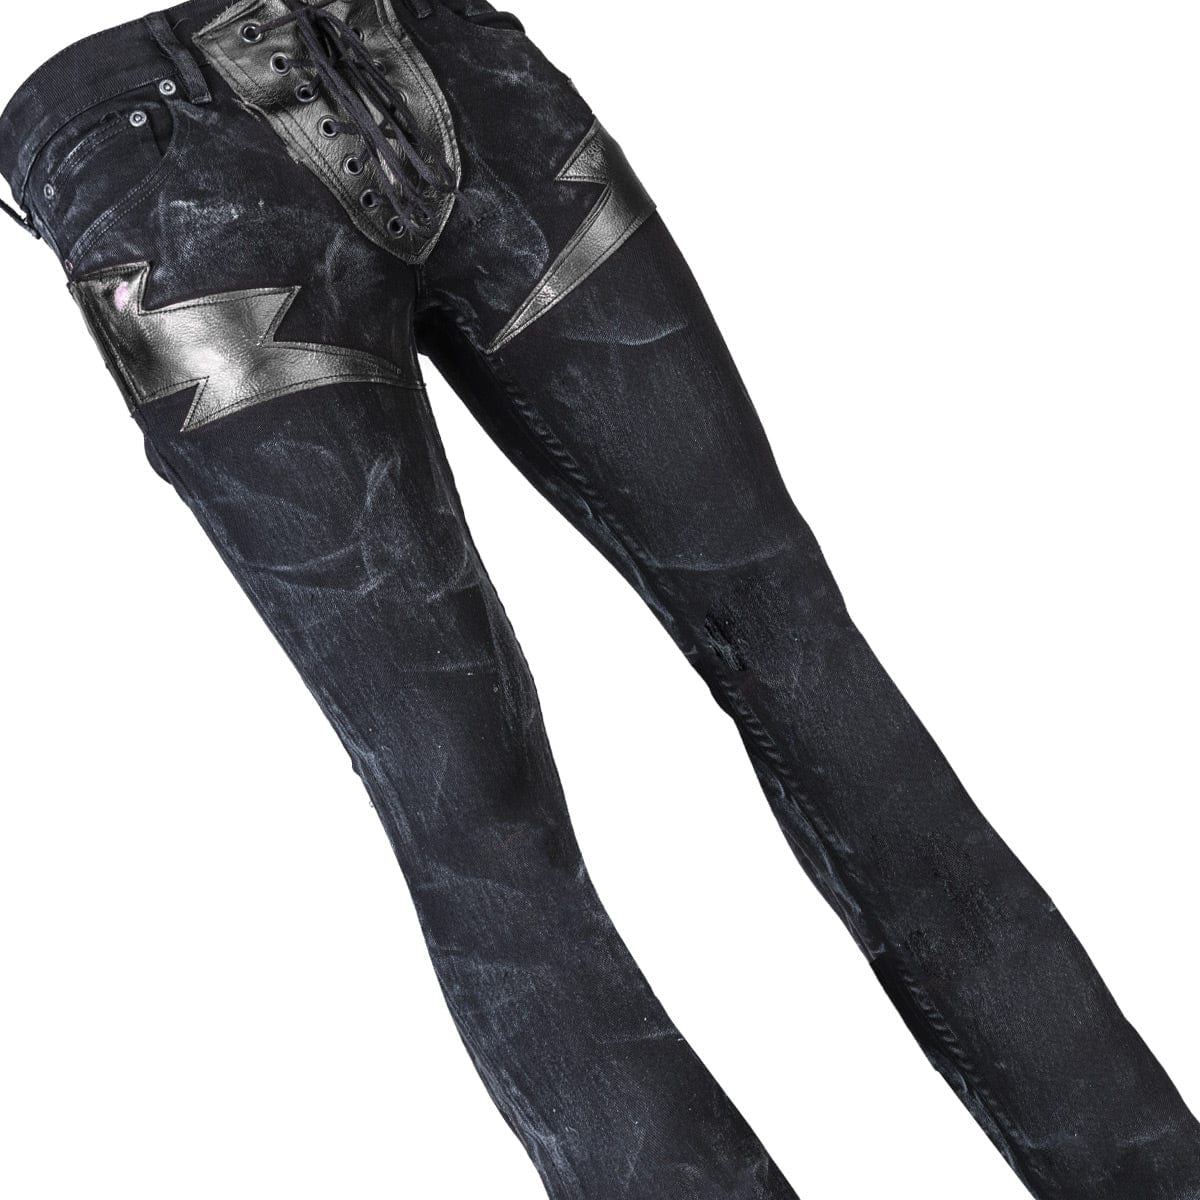 Wornstar Custom Jeans - Ravenbolt